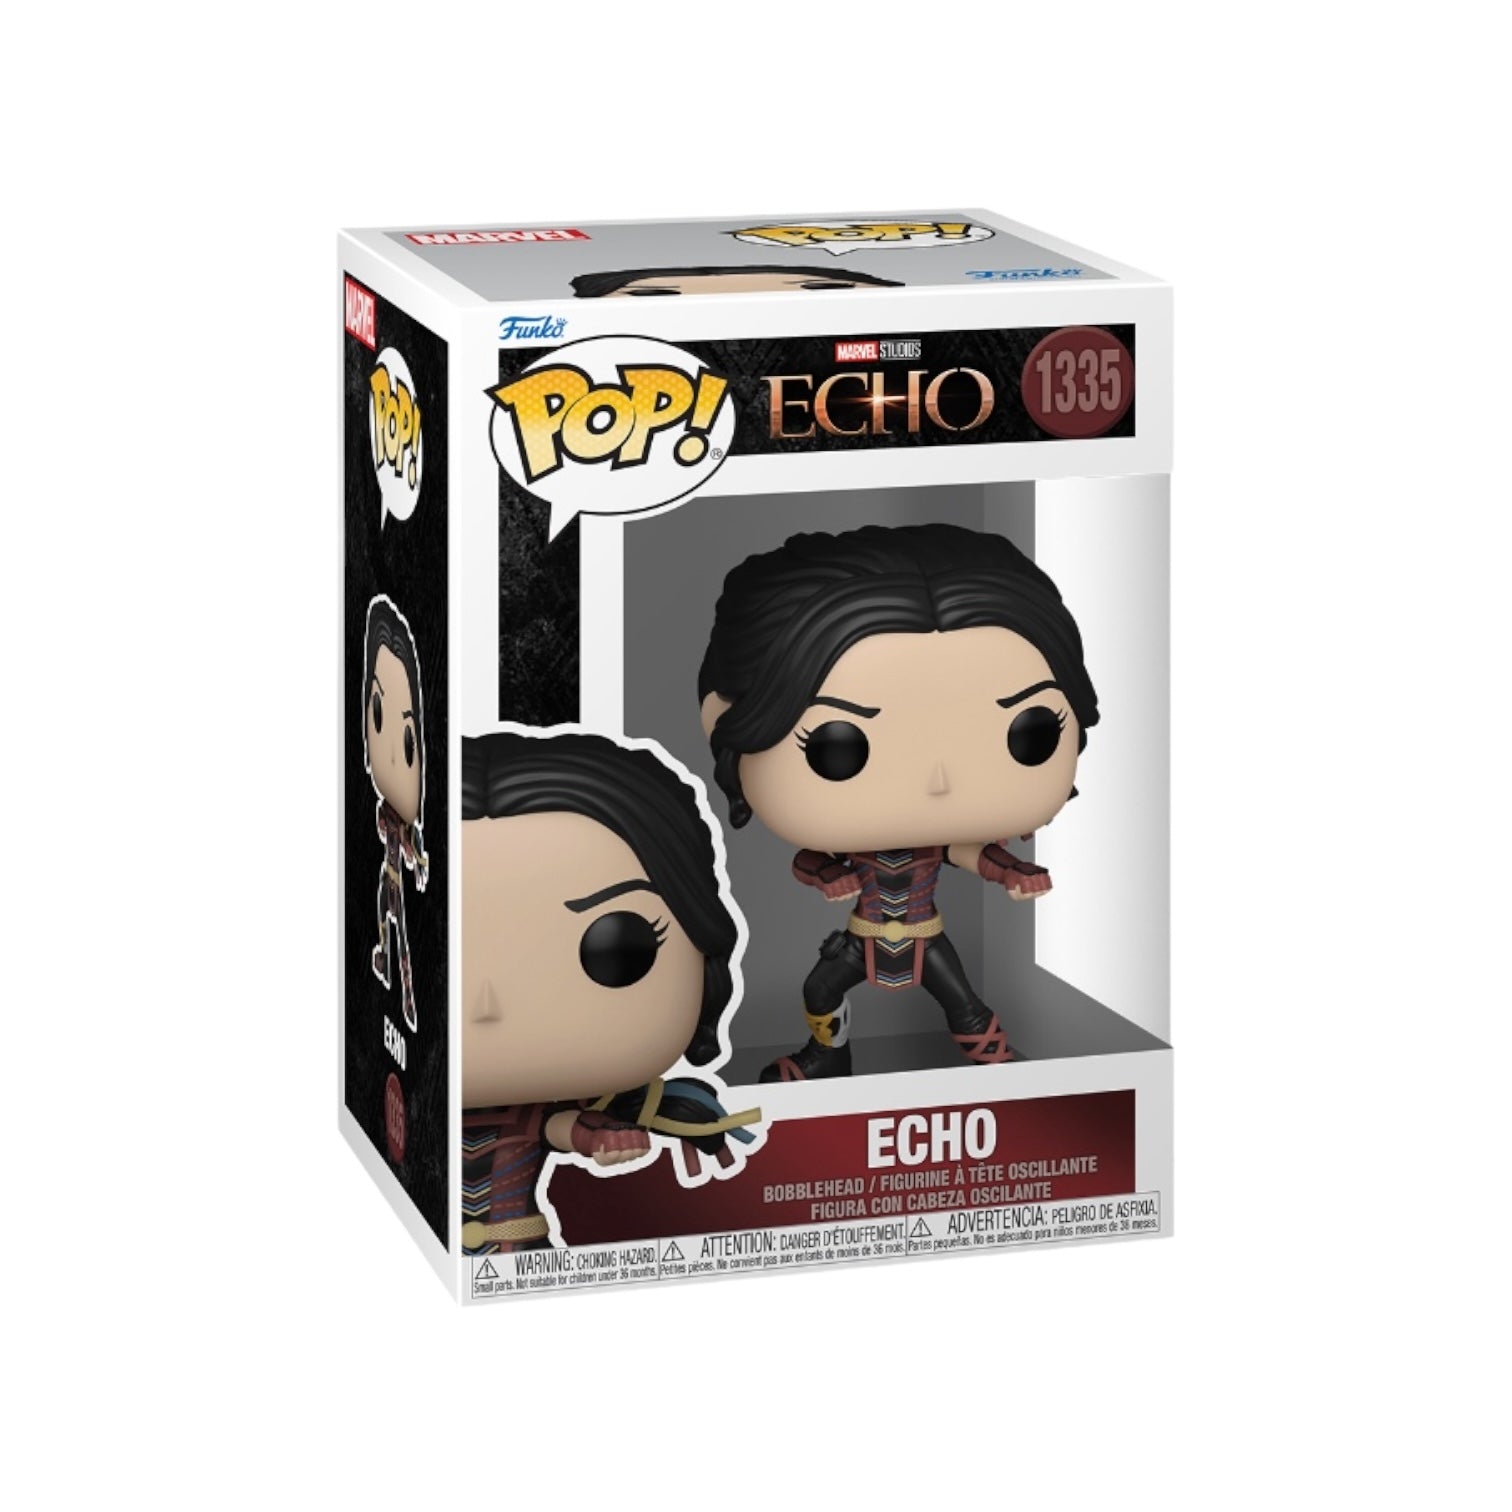 Echo #1335 Funko Pop! - Echo